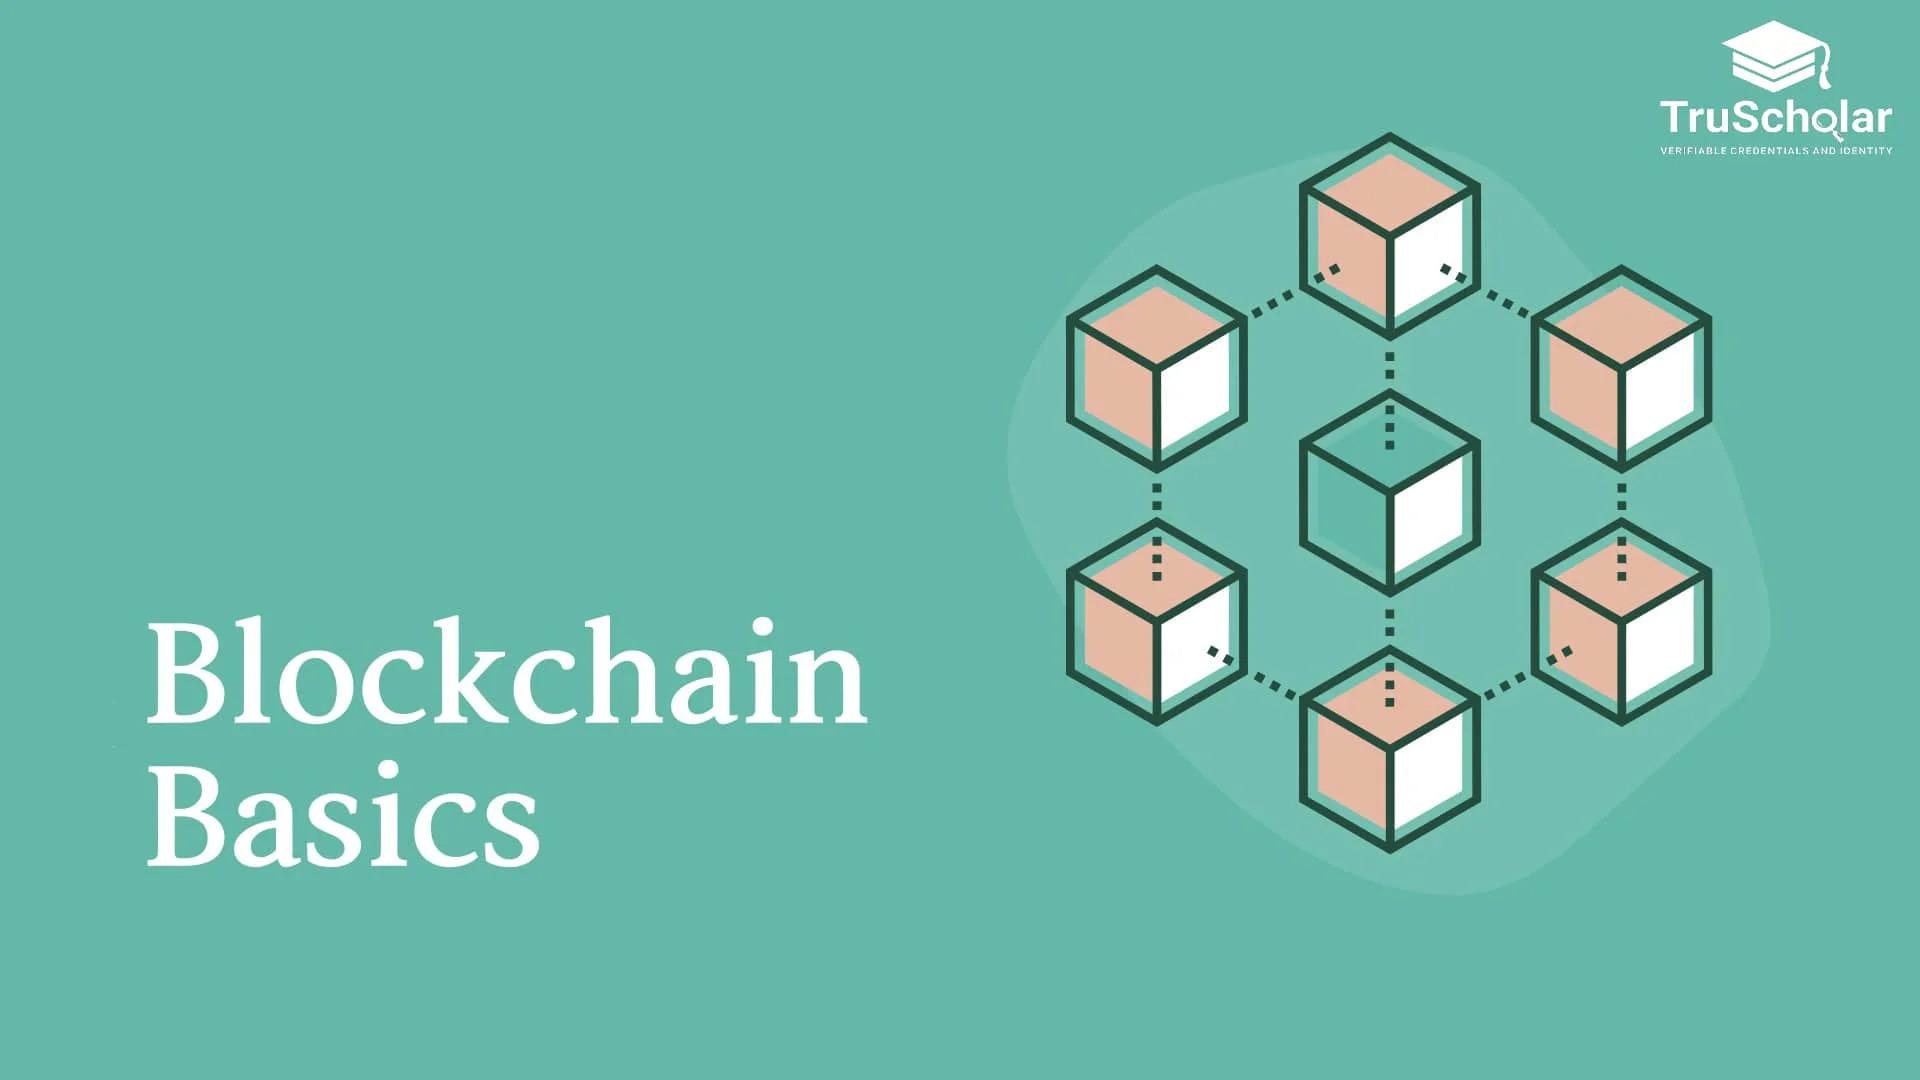 Blockchain Basics guide